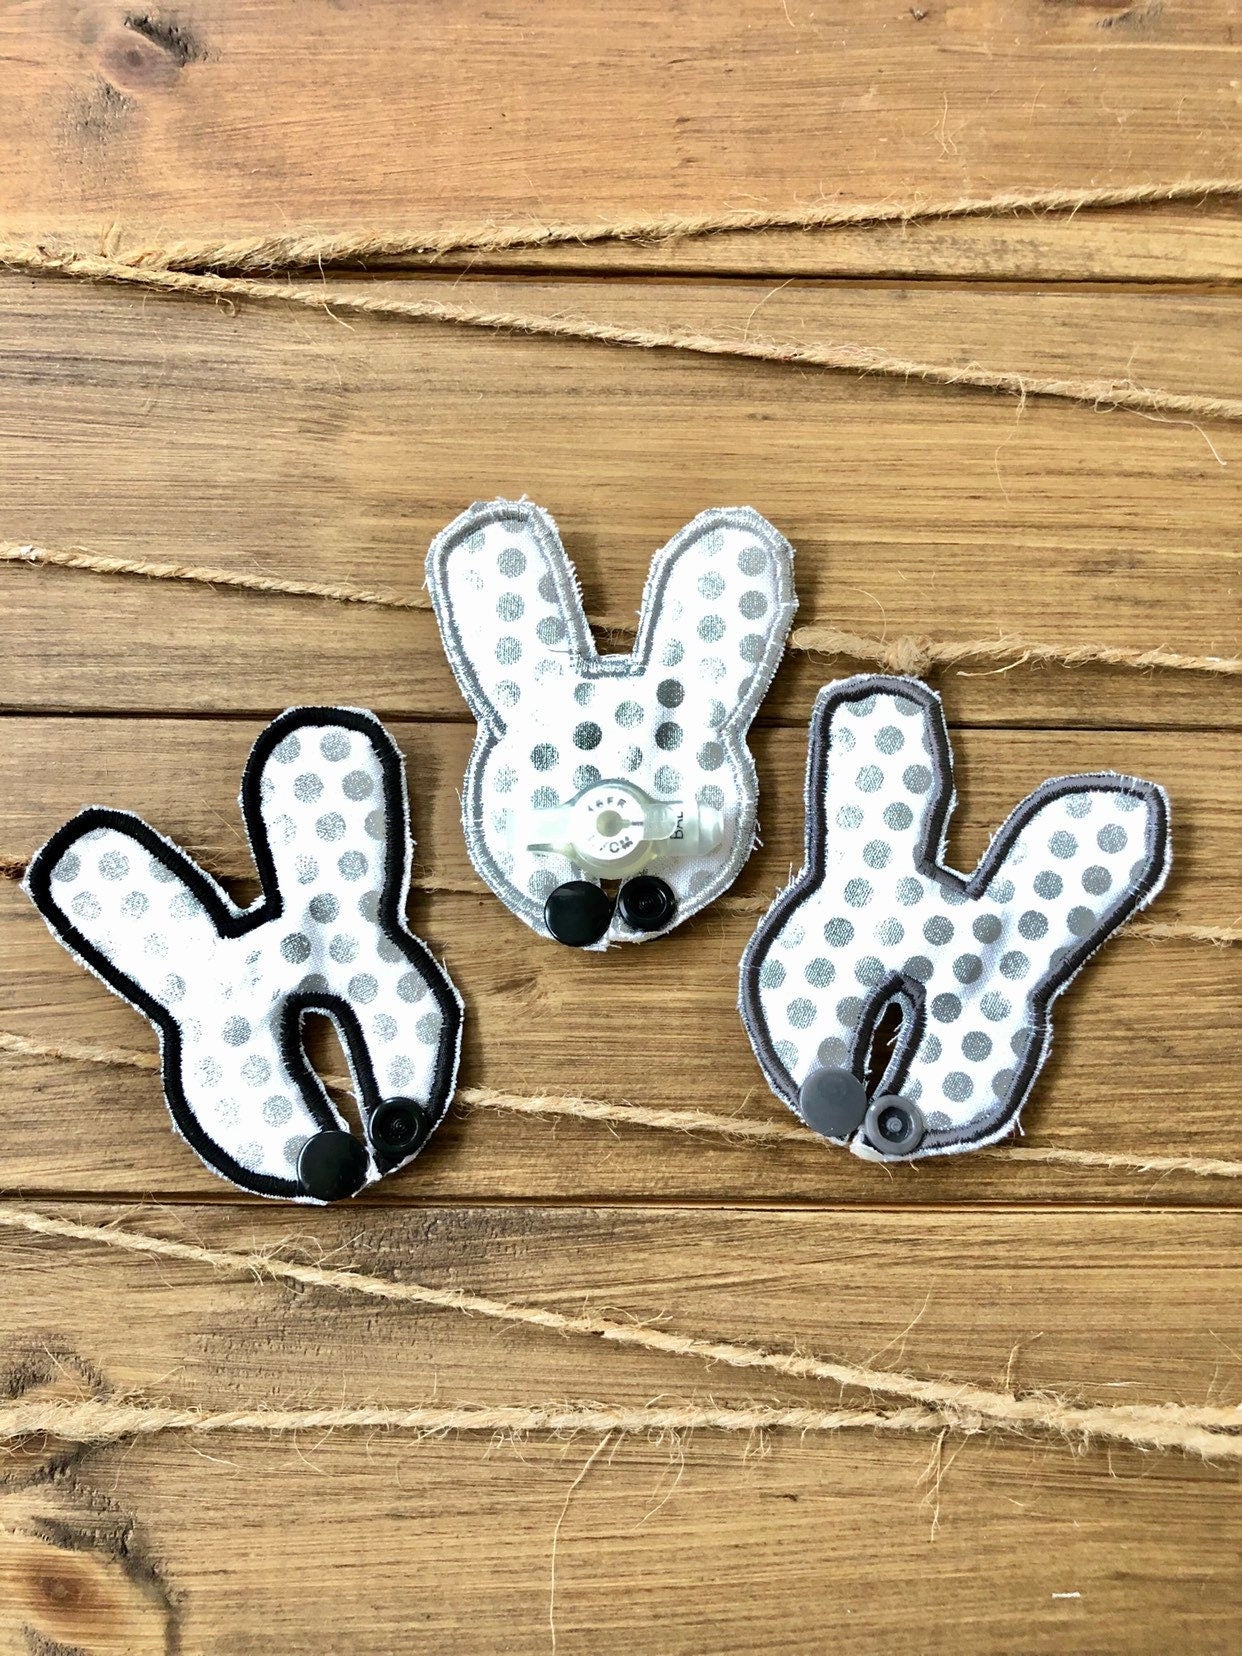 Custom "Bunny"G tube pads set of 3